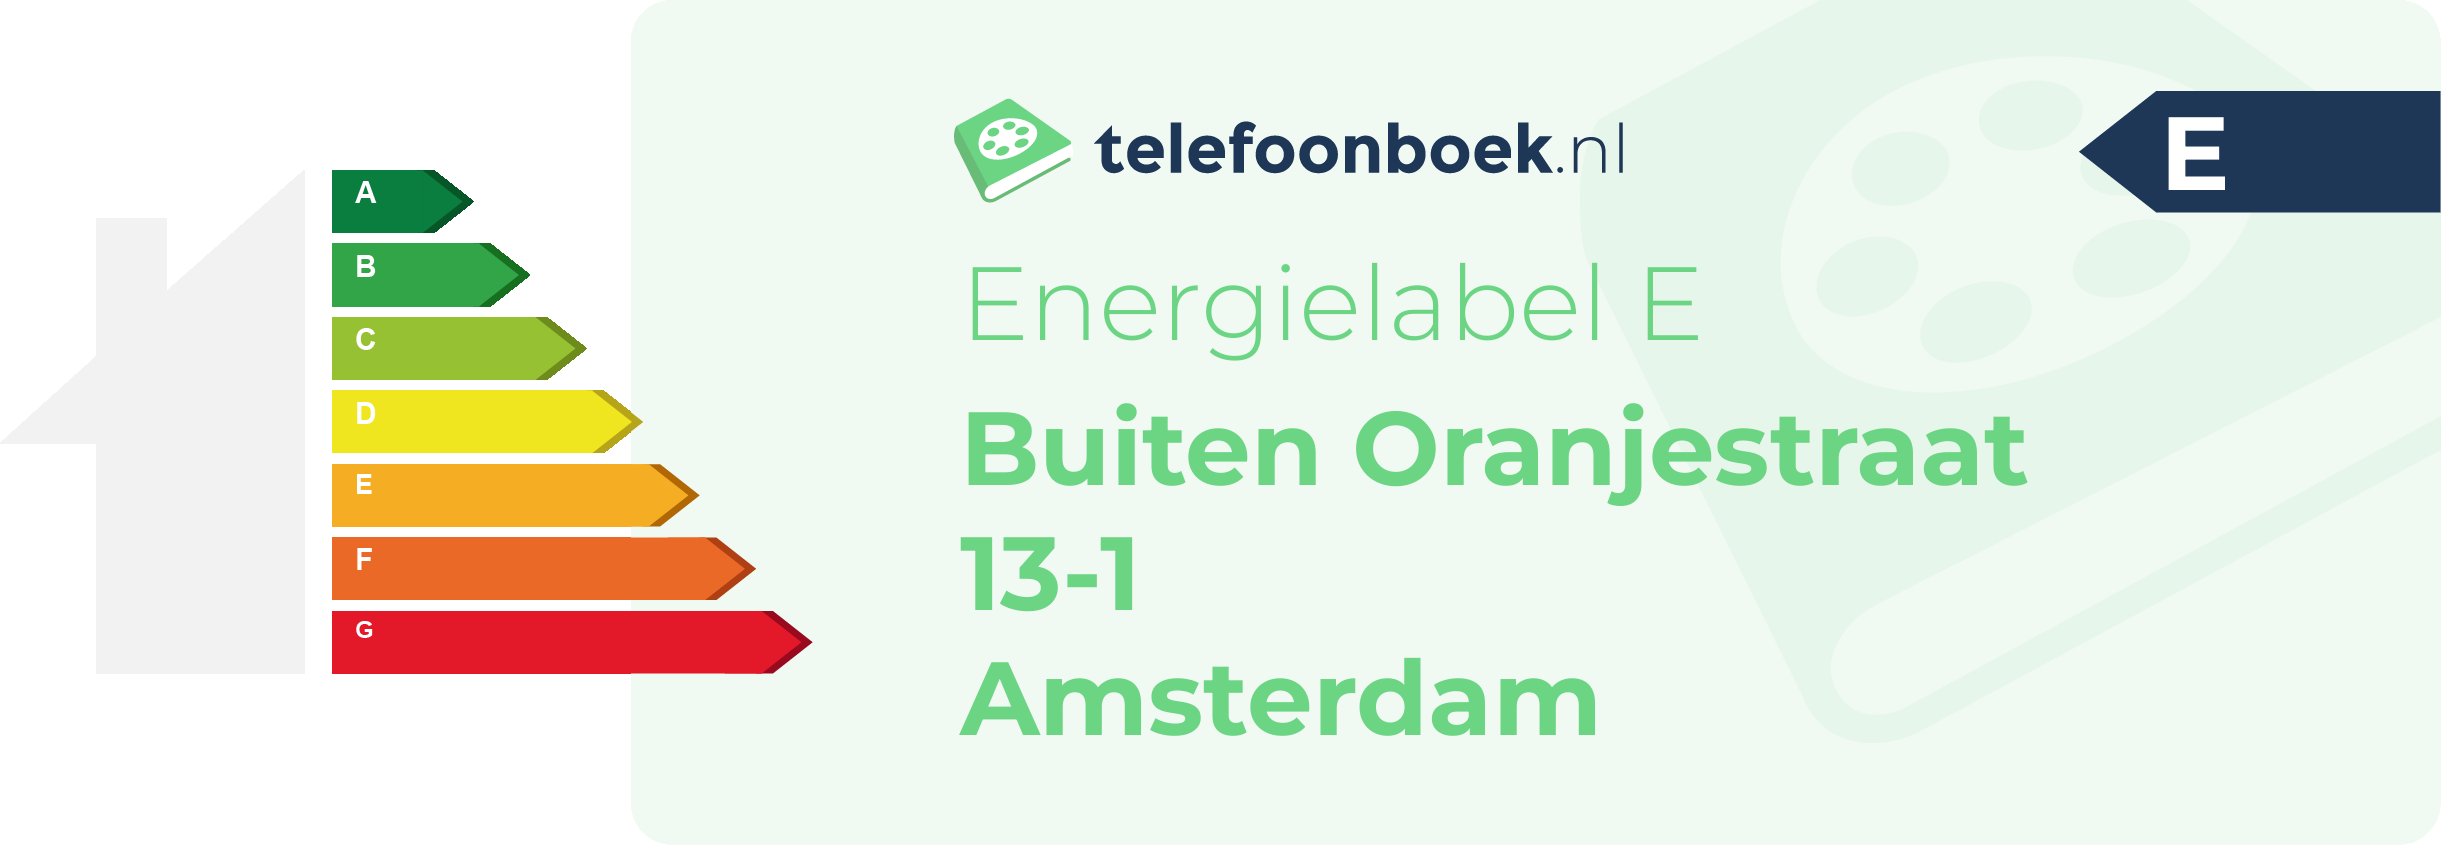 Energielabel Buiten Oranjestraat 13-1 Amsterdam